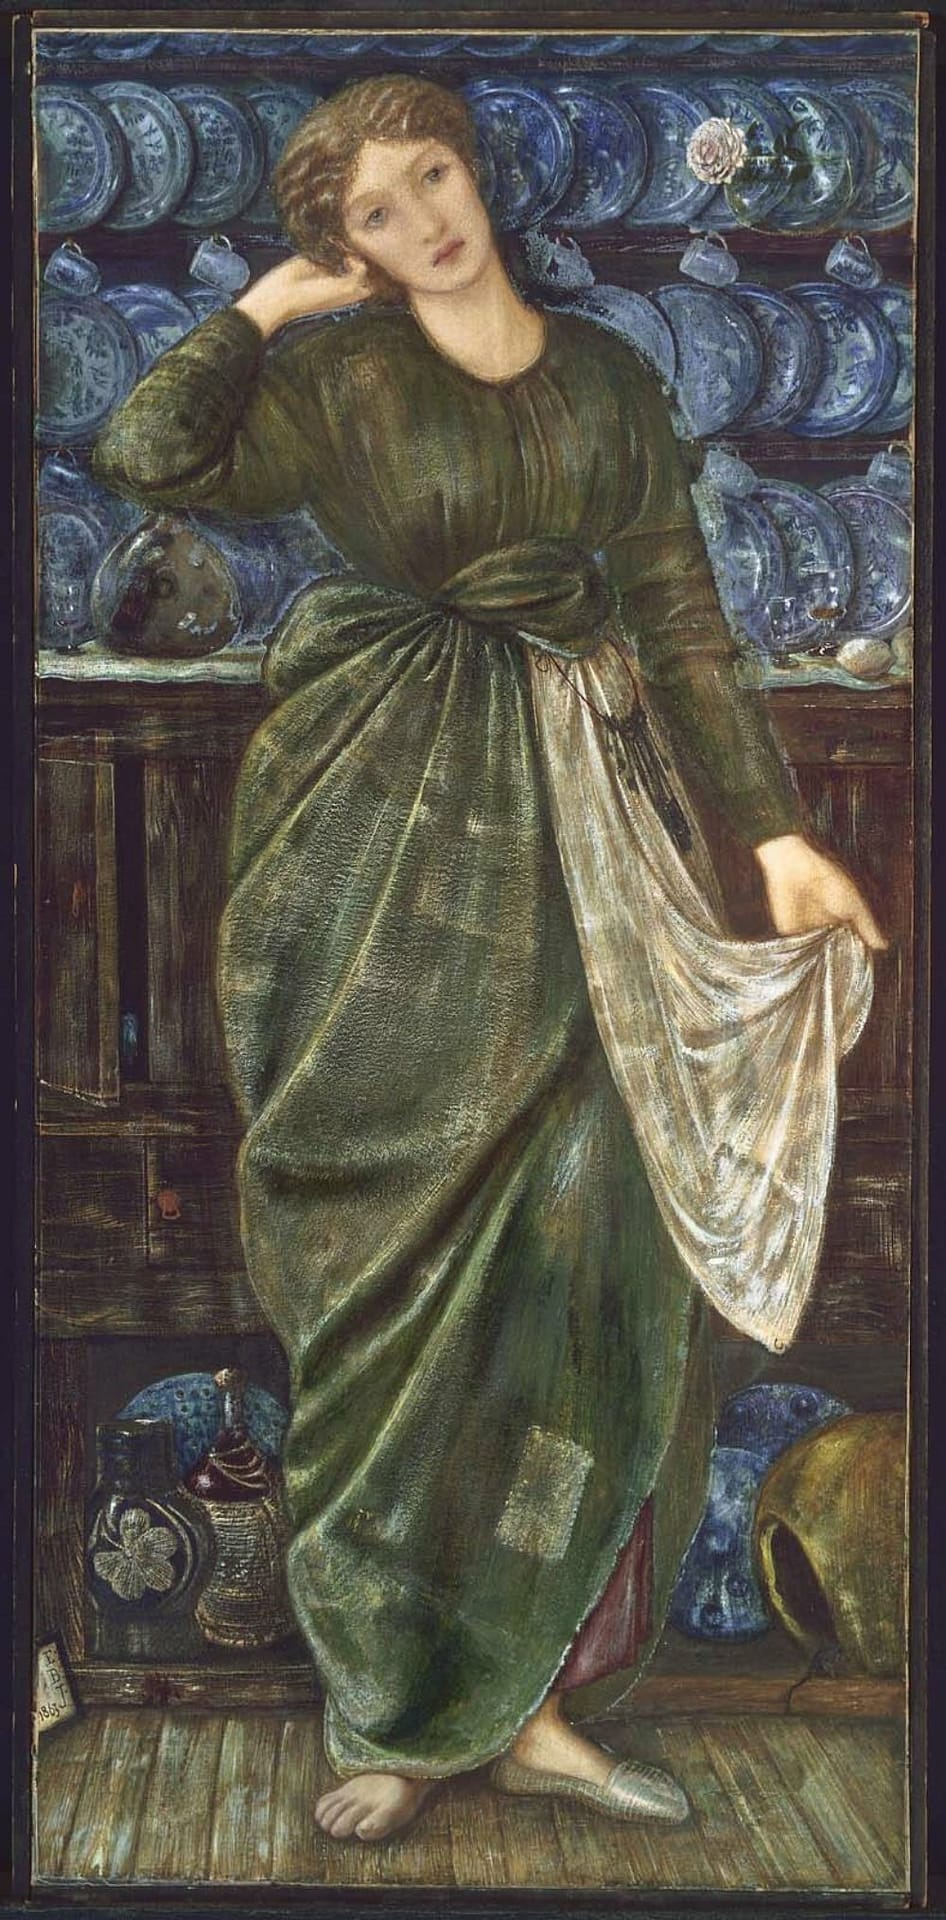 Cinderella by Edward Burne-Jones via Wiki Commons